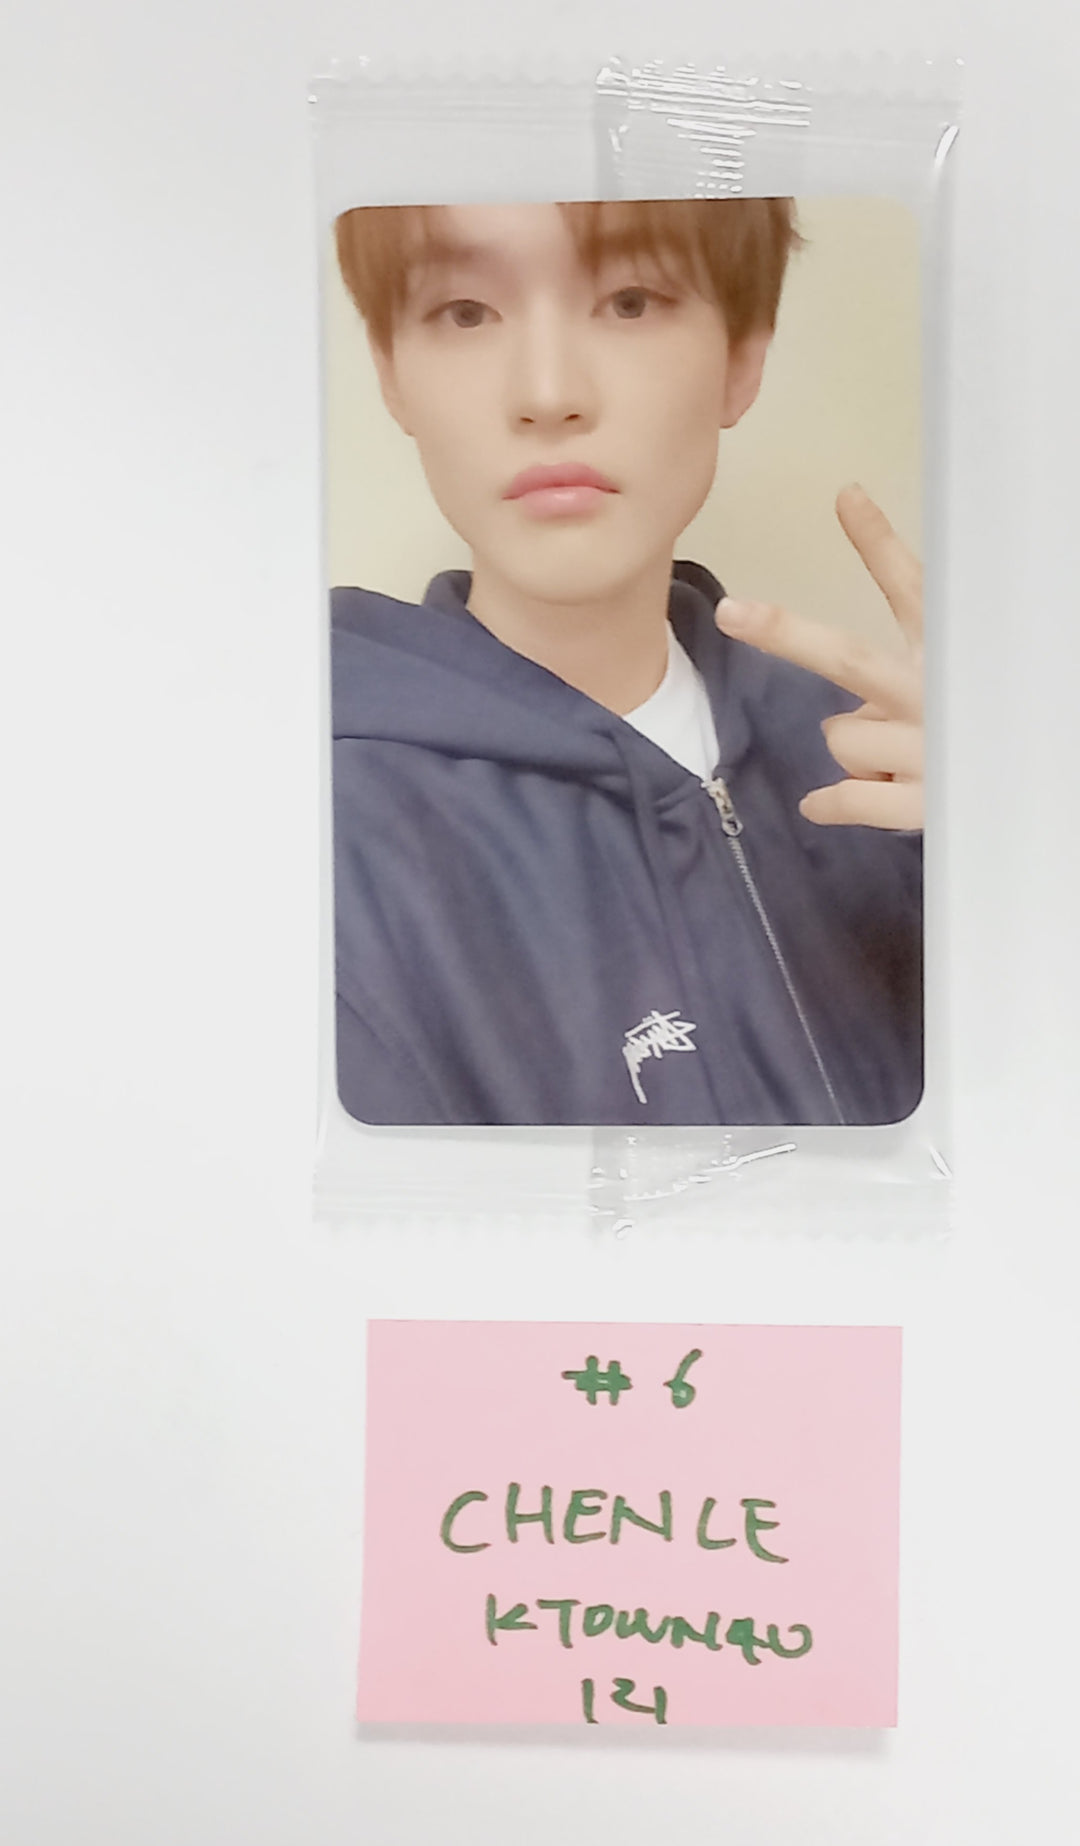 NCT DREAM "DREAM( )SCAPE" - Ktown4U Pre-Order Benefit Photocard [24.4.1]